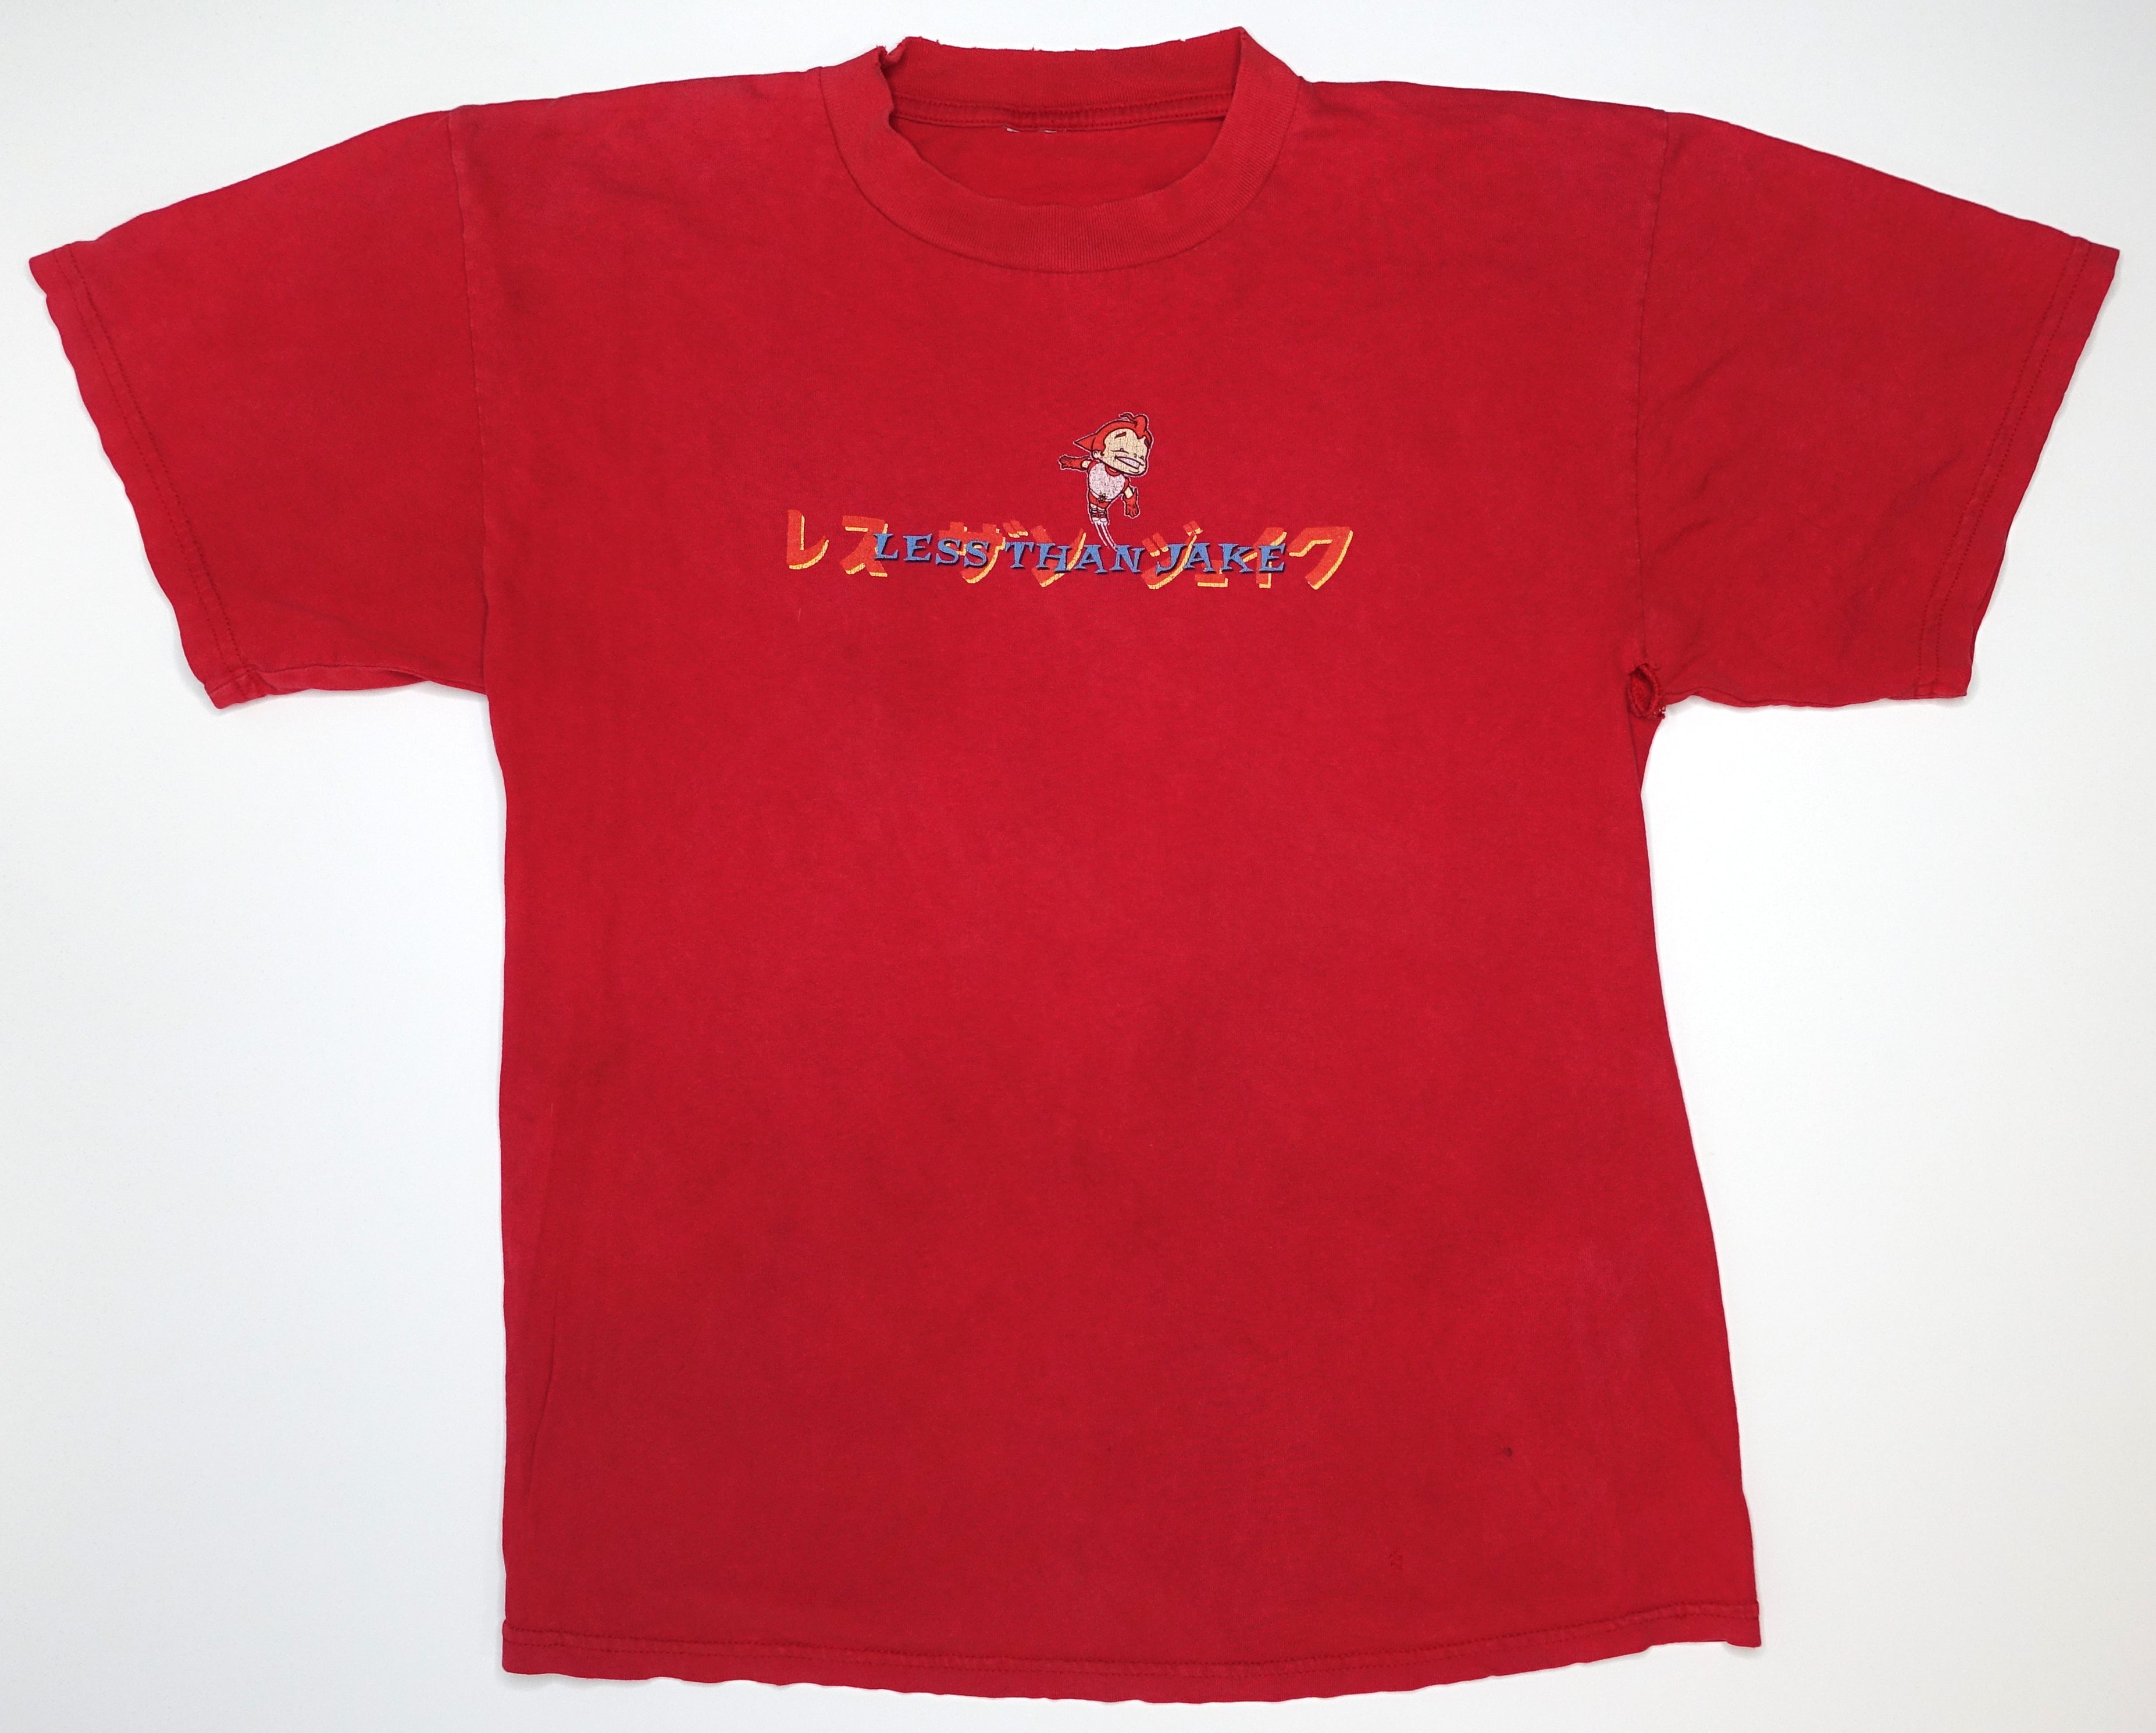 Less Than Jake - レスザンジェイク 90's Tour Shirt Size Large